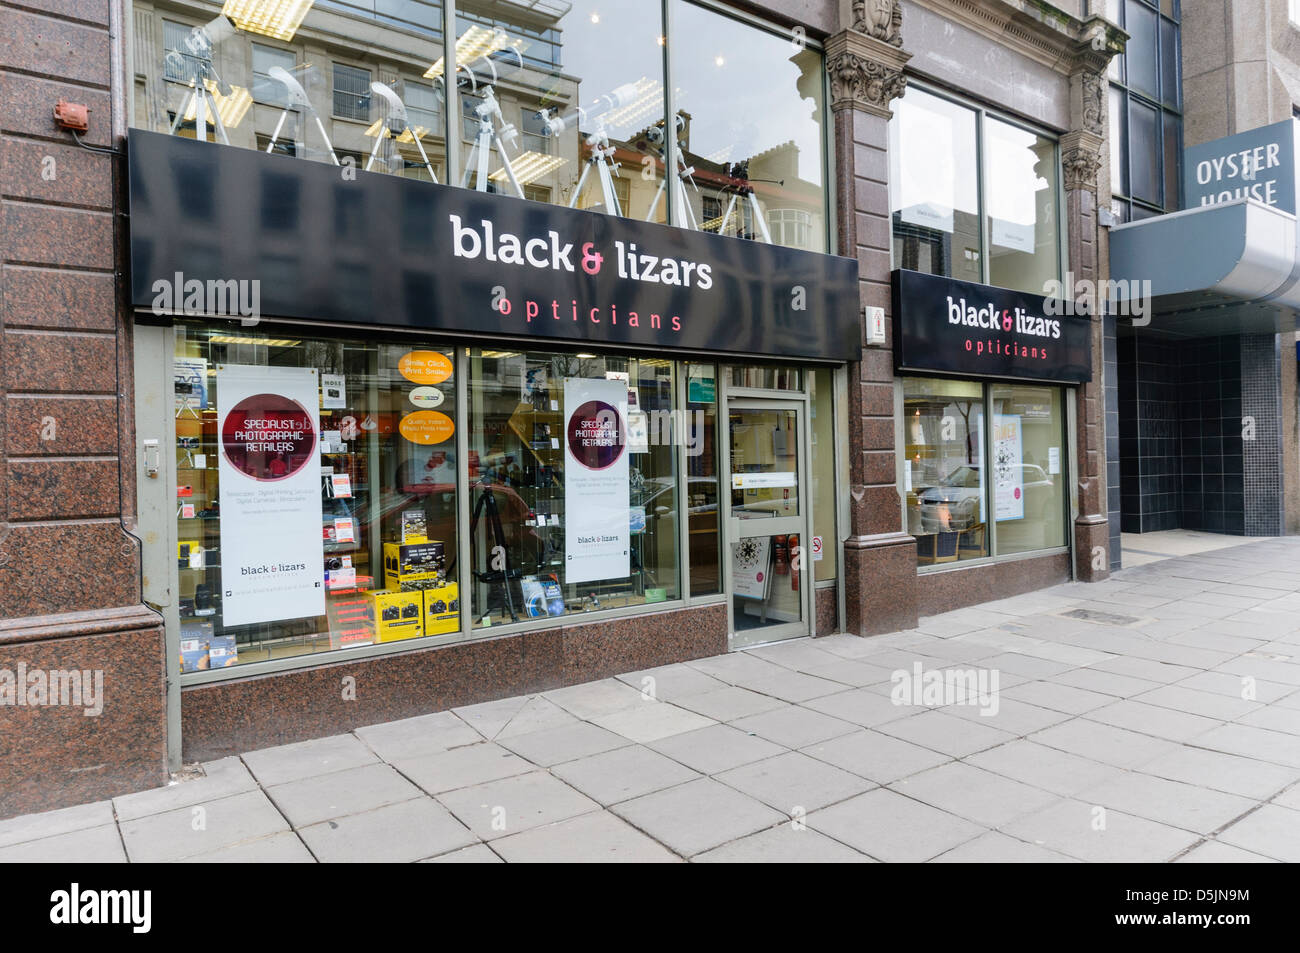 Blacks and Lizars shop and opticians, Belfast. Stock Photo